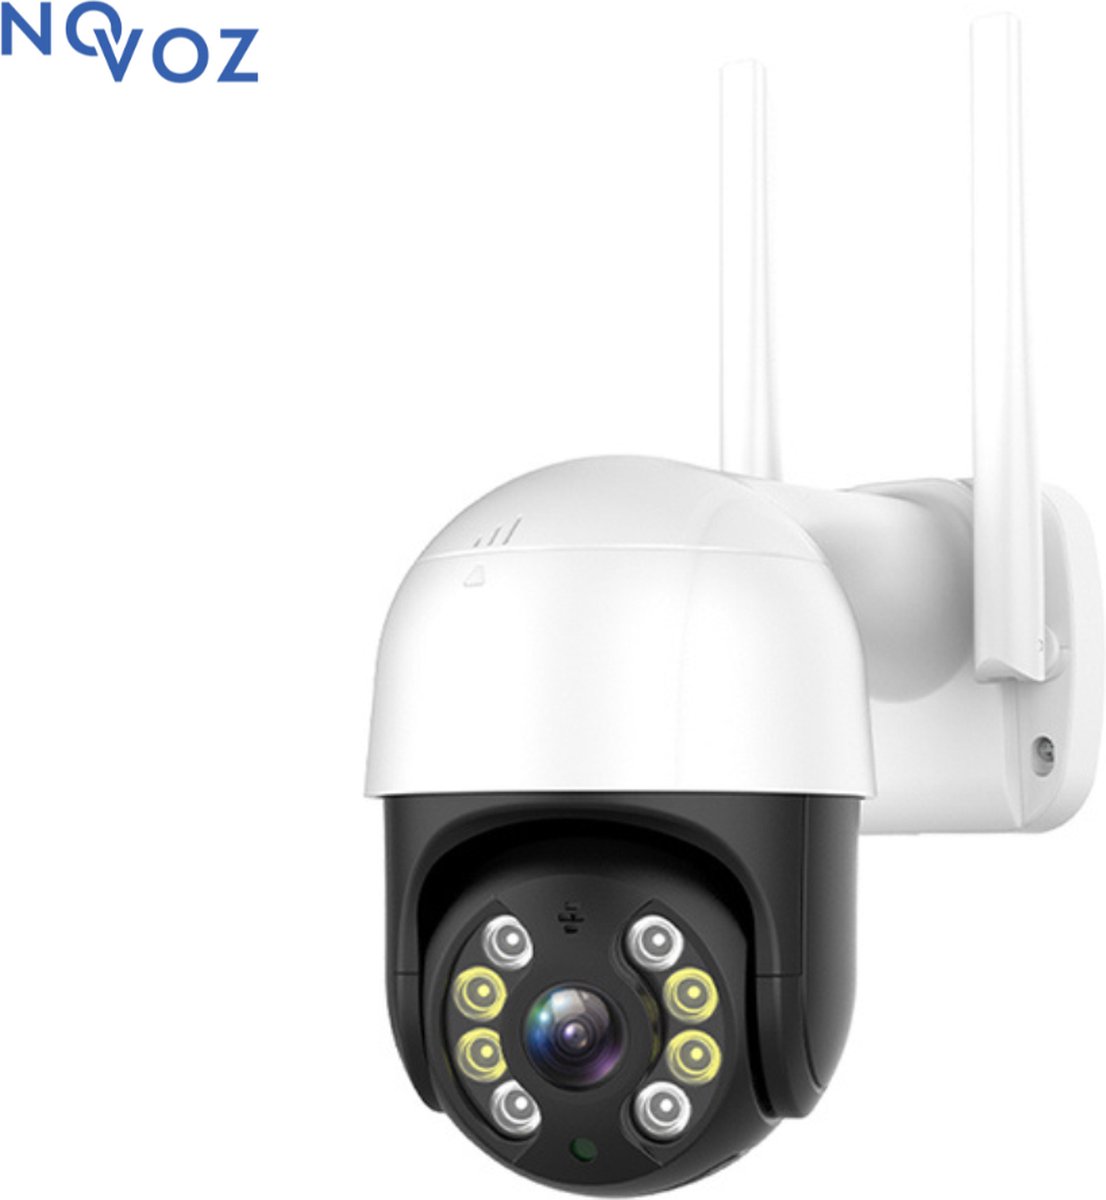 Novoz Buitencamera Wifi Met App - Draadloos - Bewakingscamera - Camera In Huis - Bewegingsdetectie - 64GB